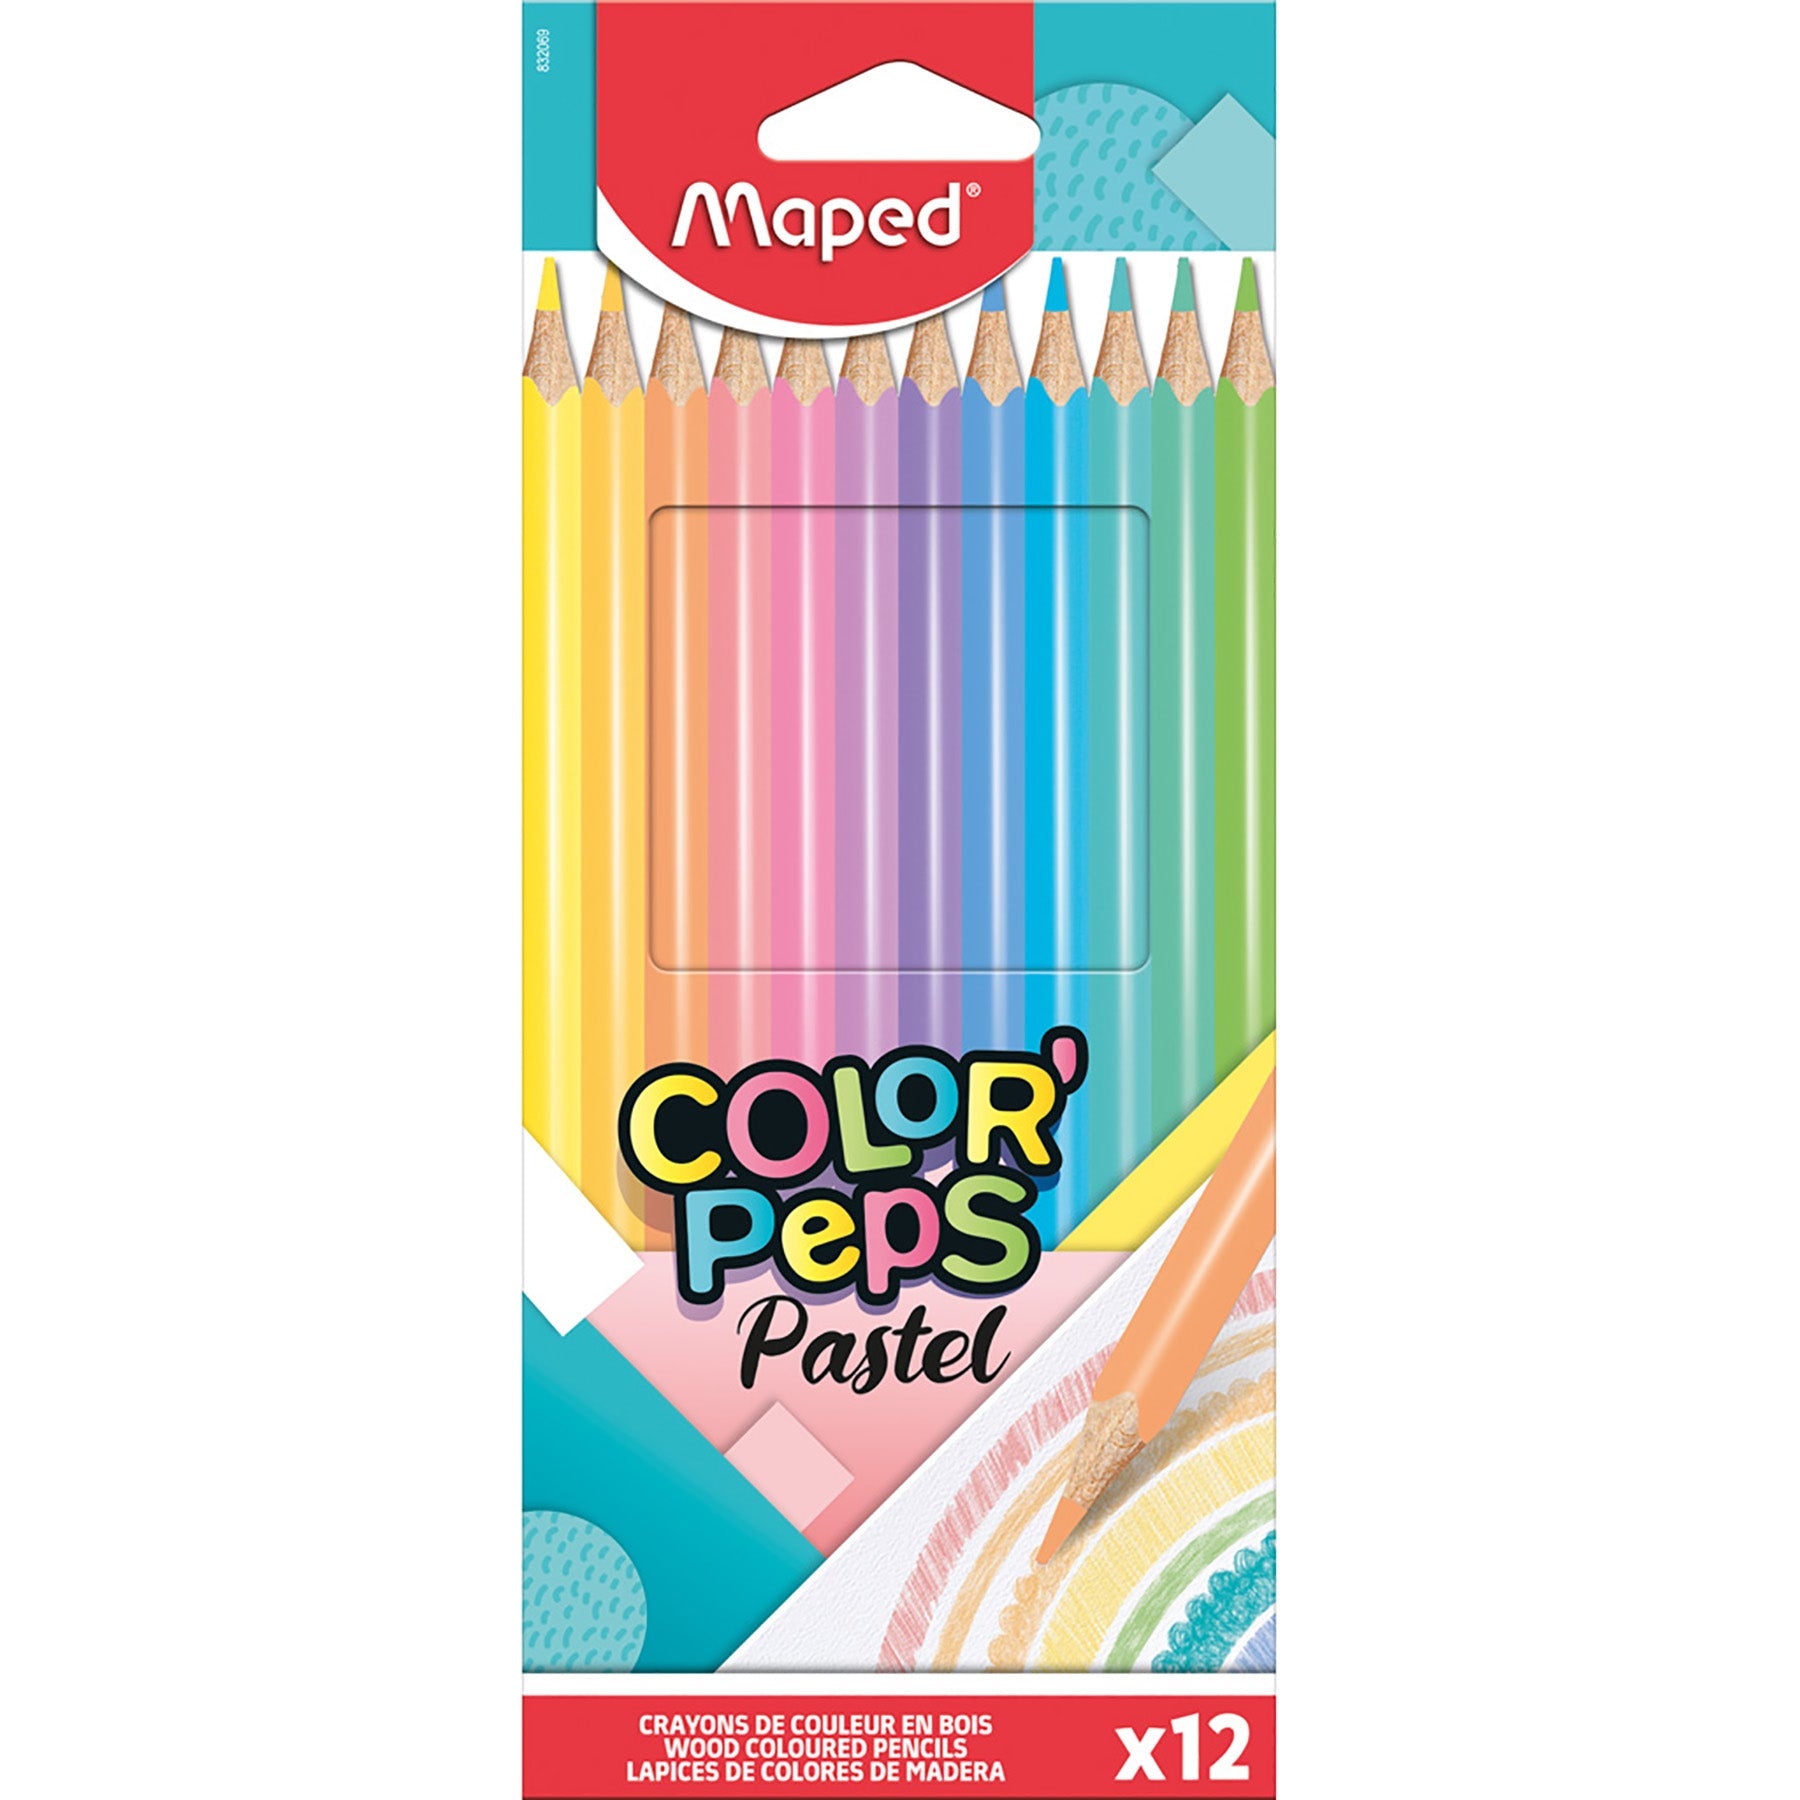 Maped Color'Peps Pastel 12 Coloring Pencils